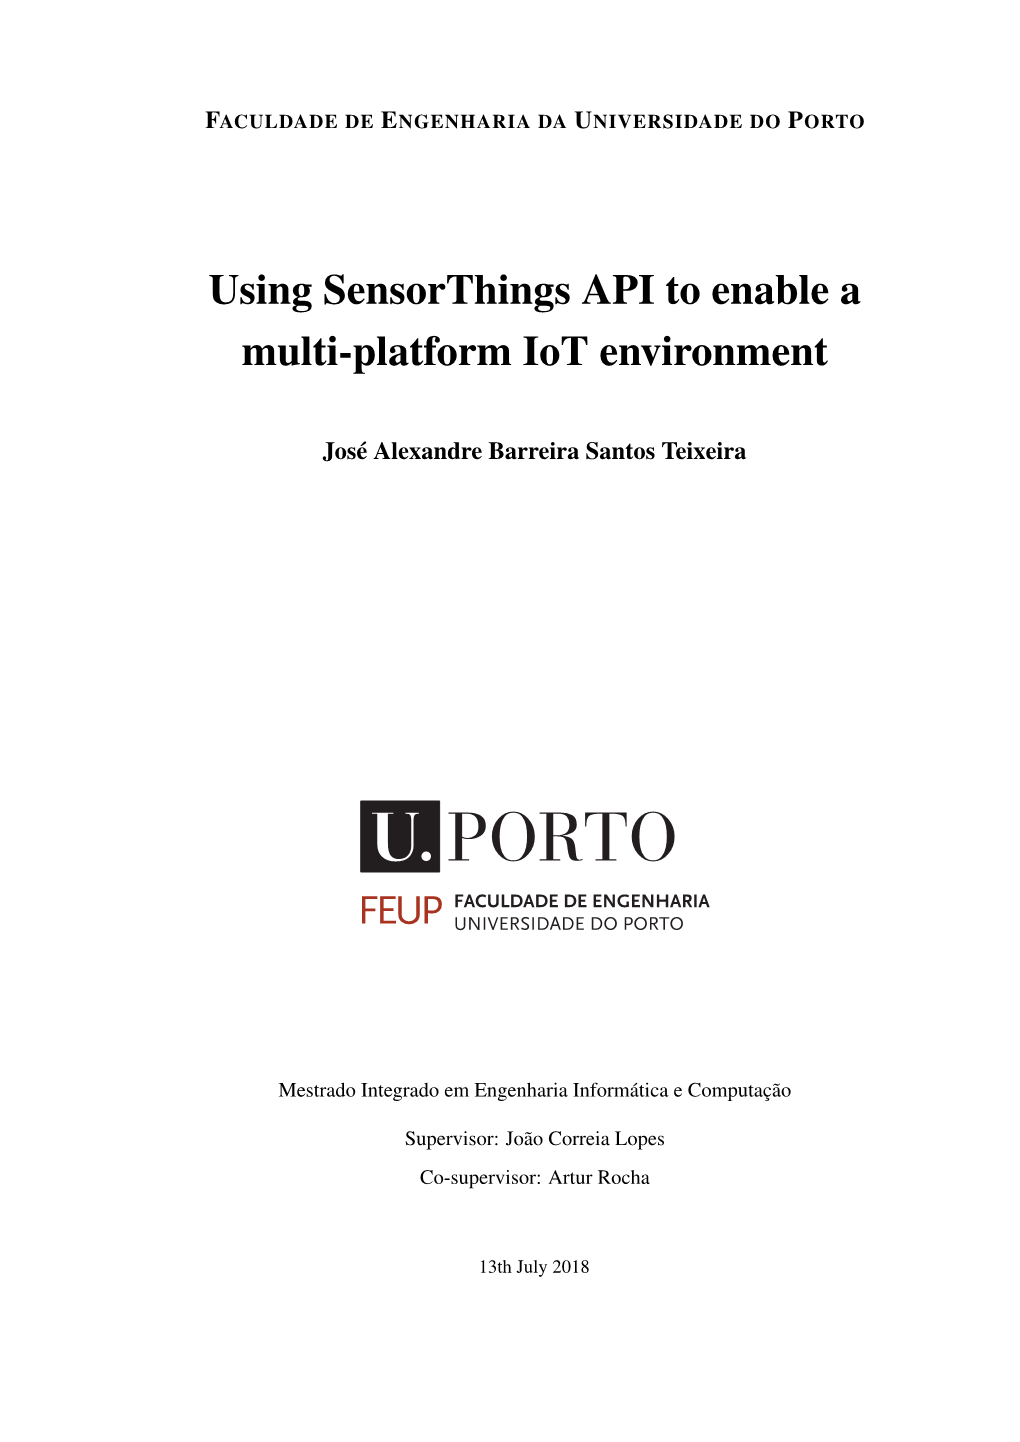 Using Sensorthings API to Enable a Multi-Platform Iot Environment